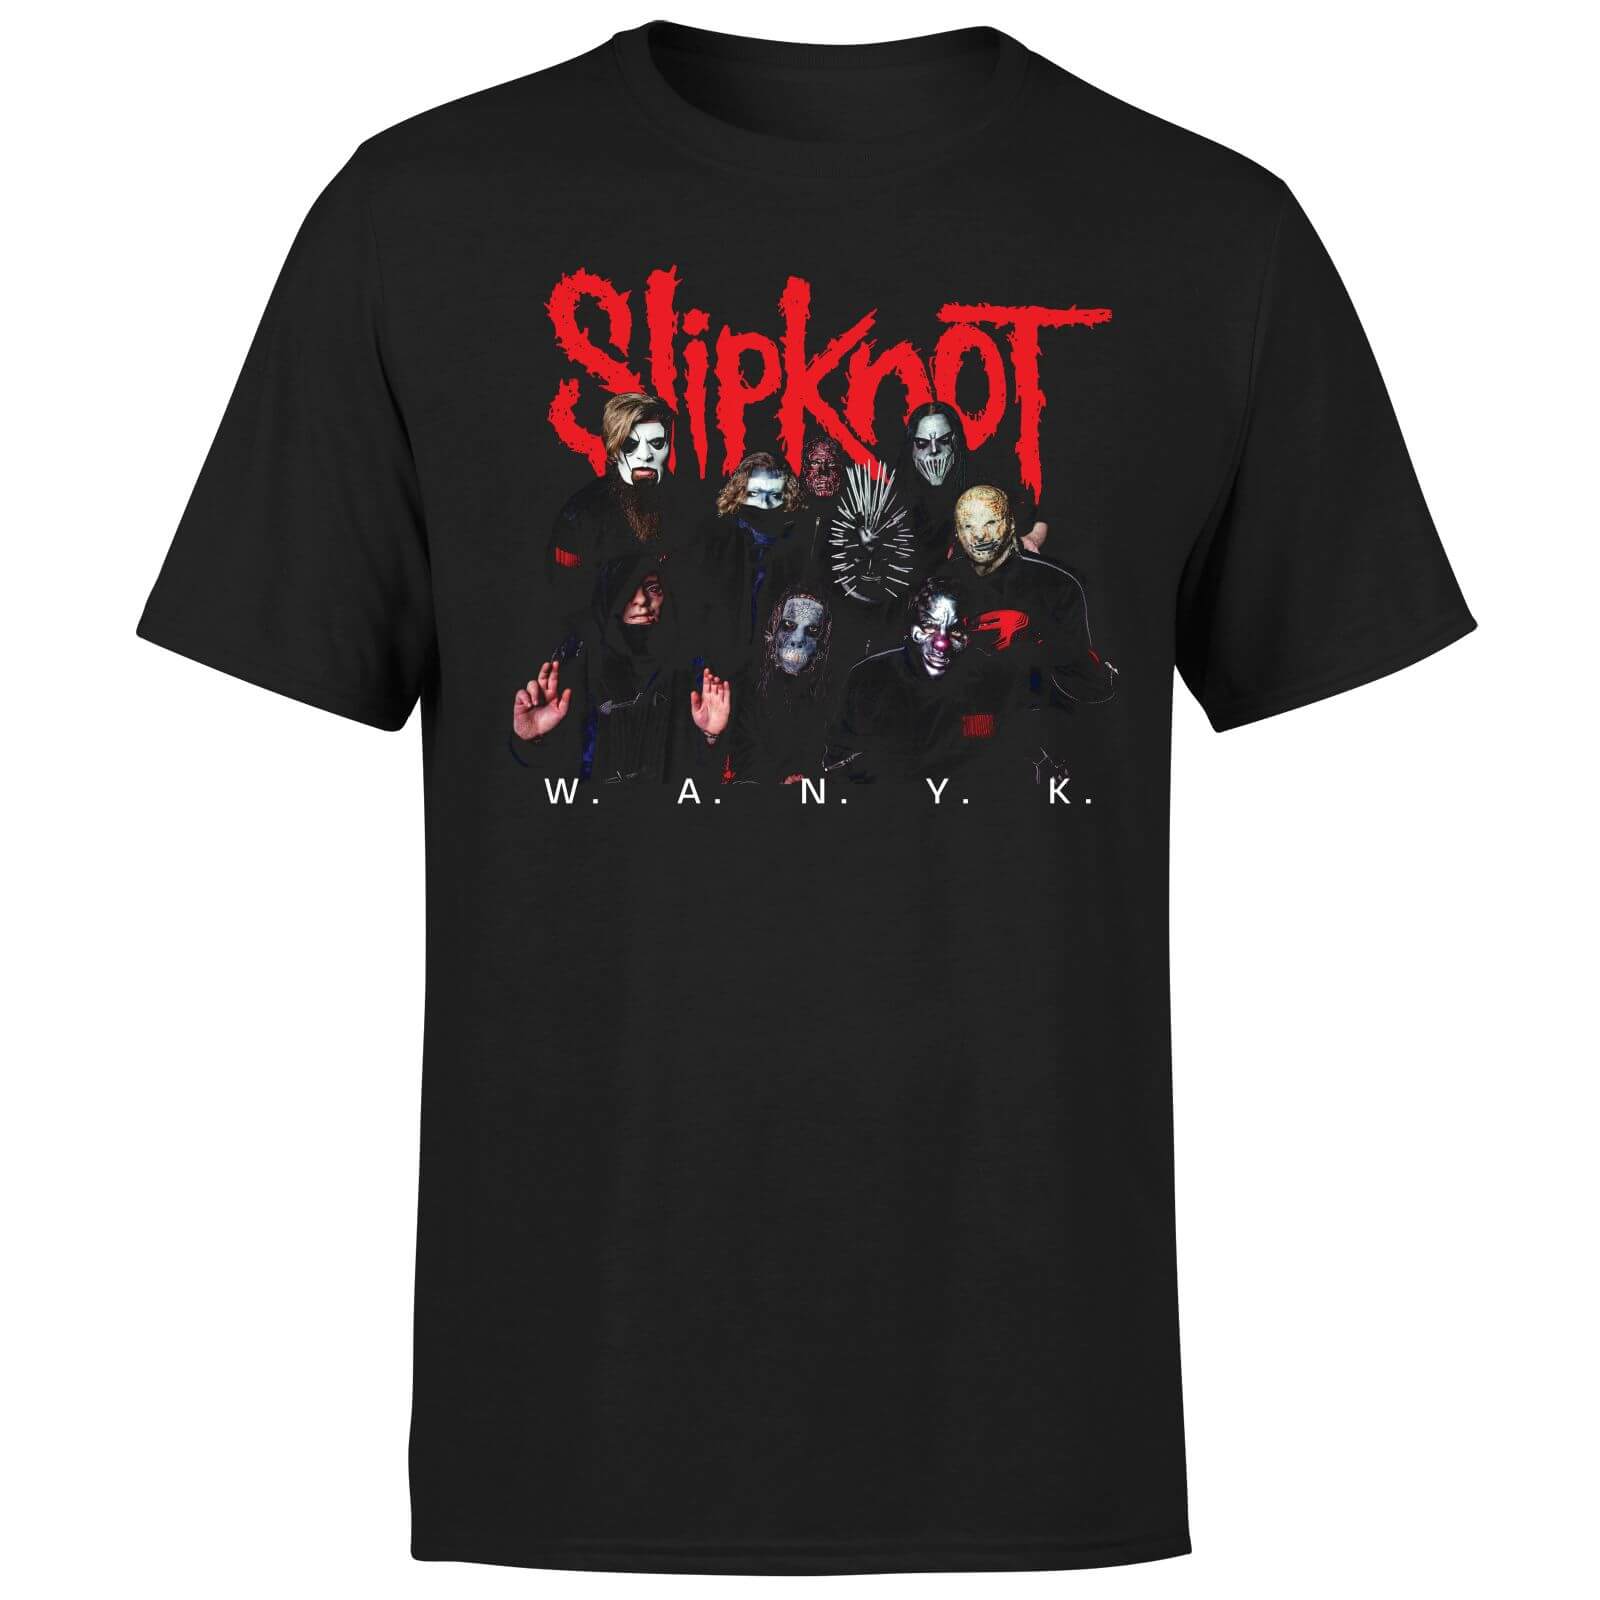 Slipknot We Are Not Your Kind Photo T-Shirt - Black - M - Black